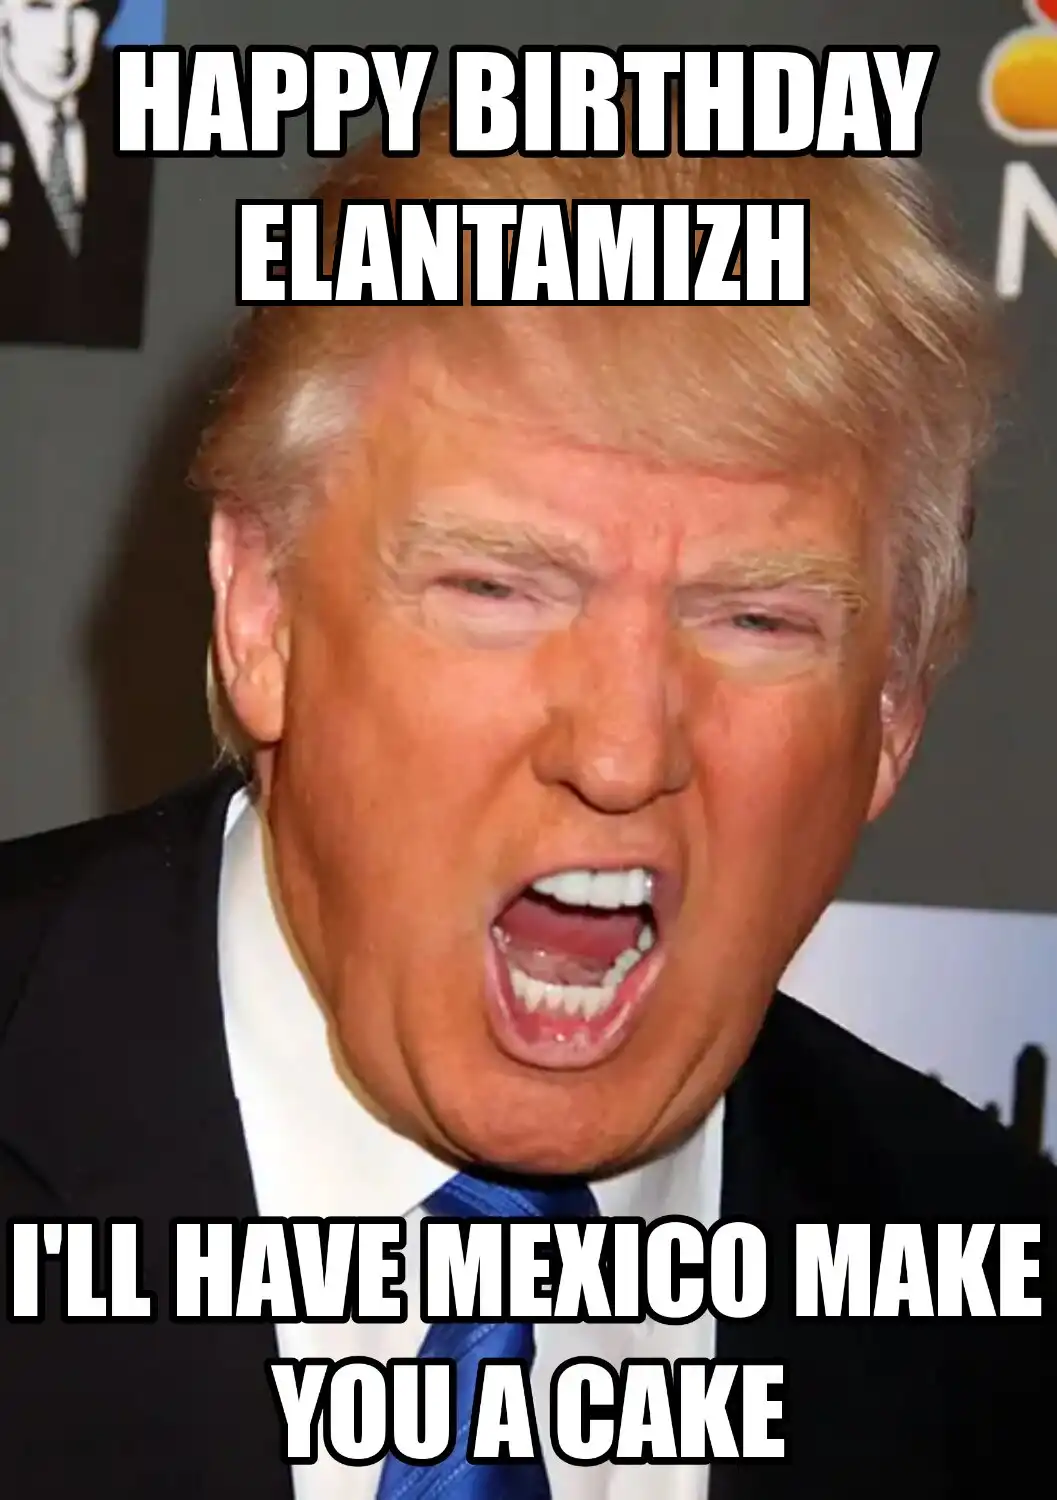 Happy Birthday Elantamizh Mexico Make You A Cake Meme